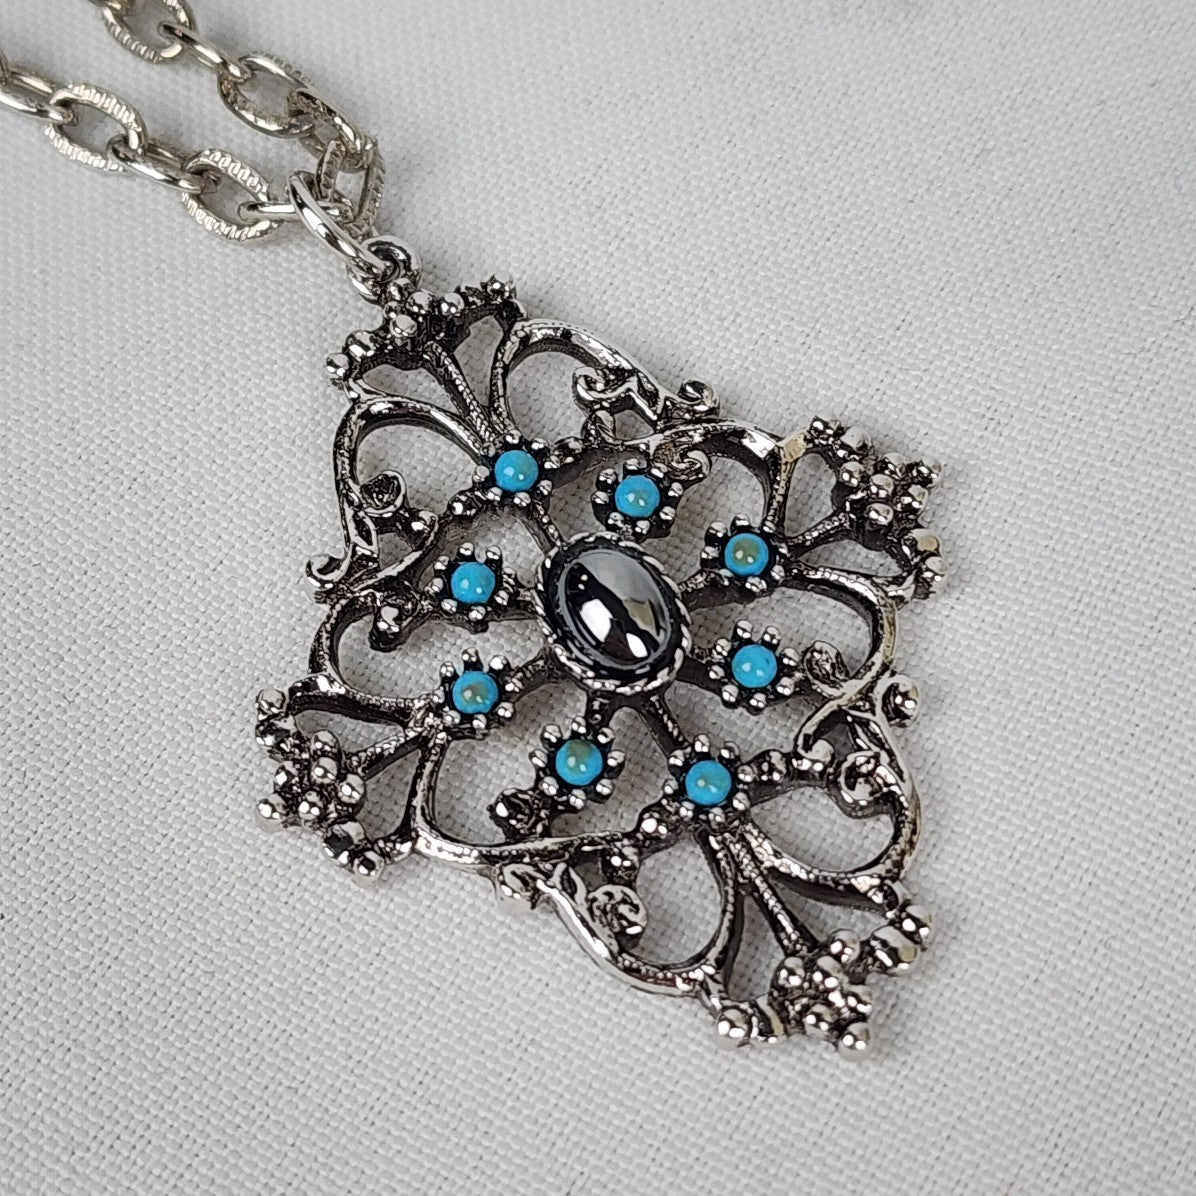 Vintage Avon Mirabella Silver & Blue Pendant Necklace